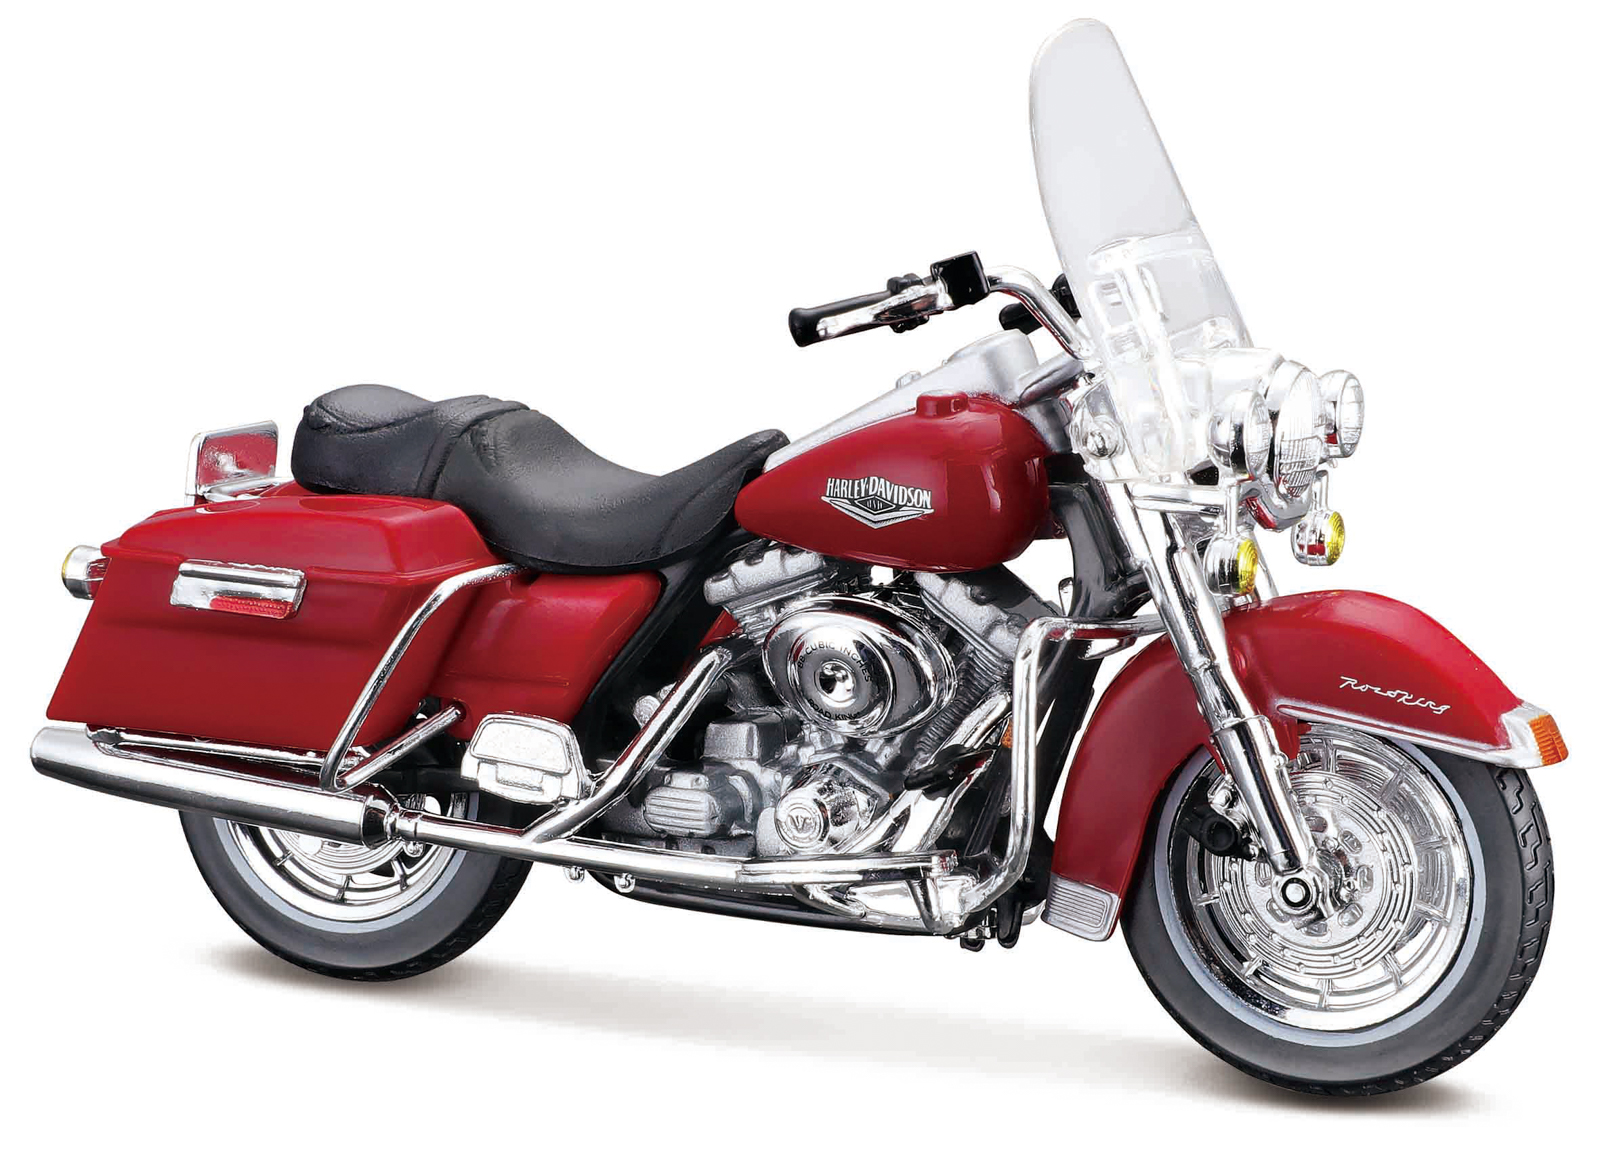 Maisto - Harley-Davidson 1999 FLHR Road King®, 1:18